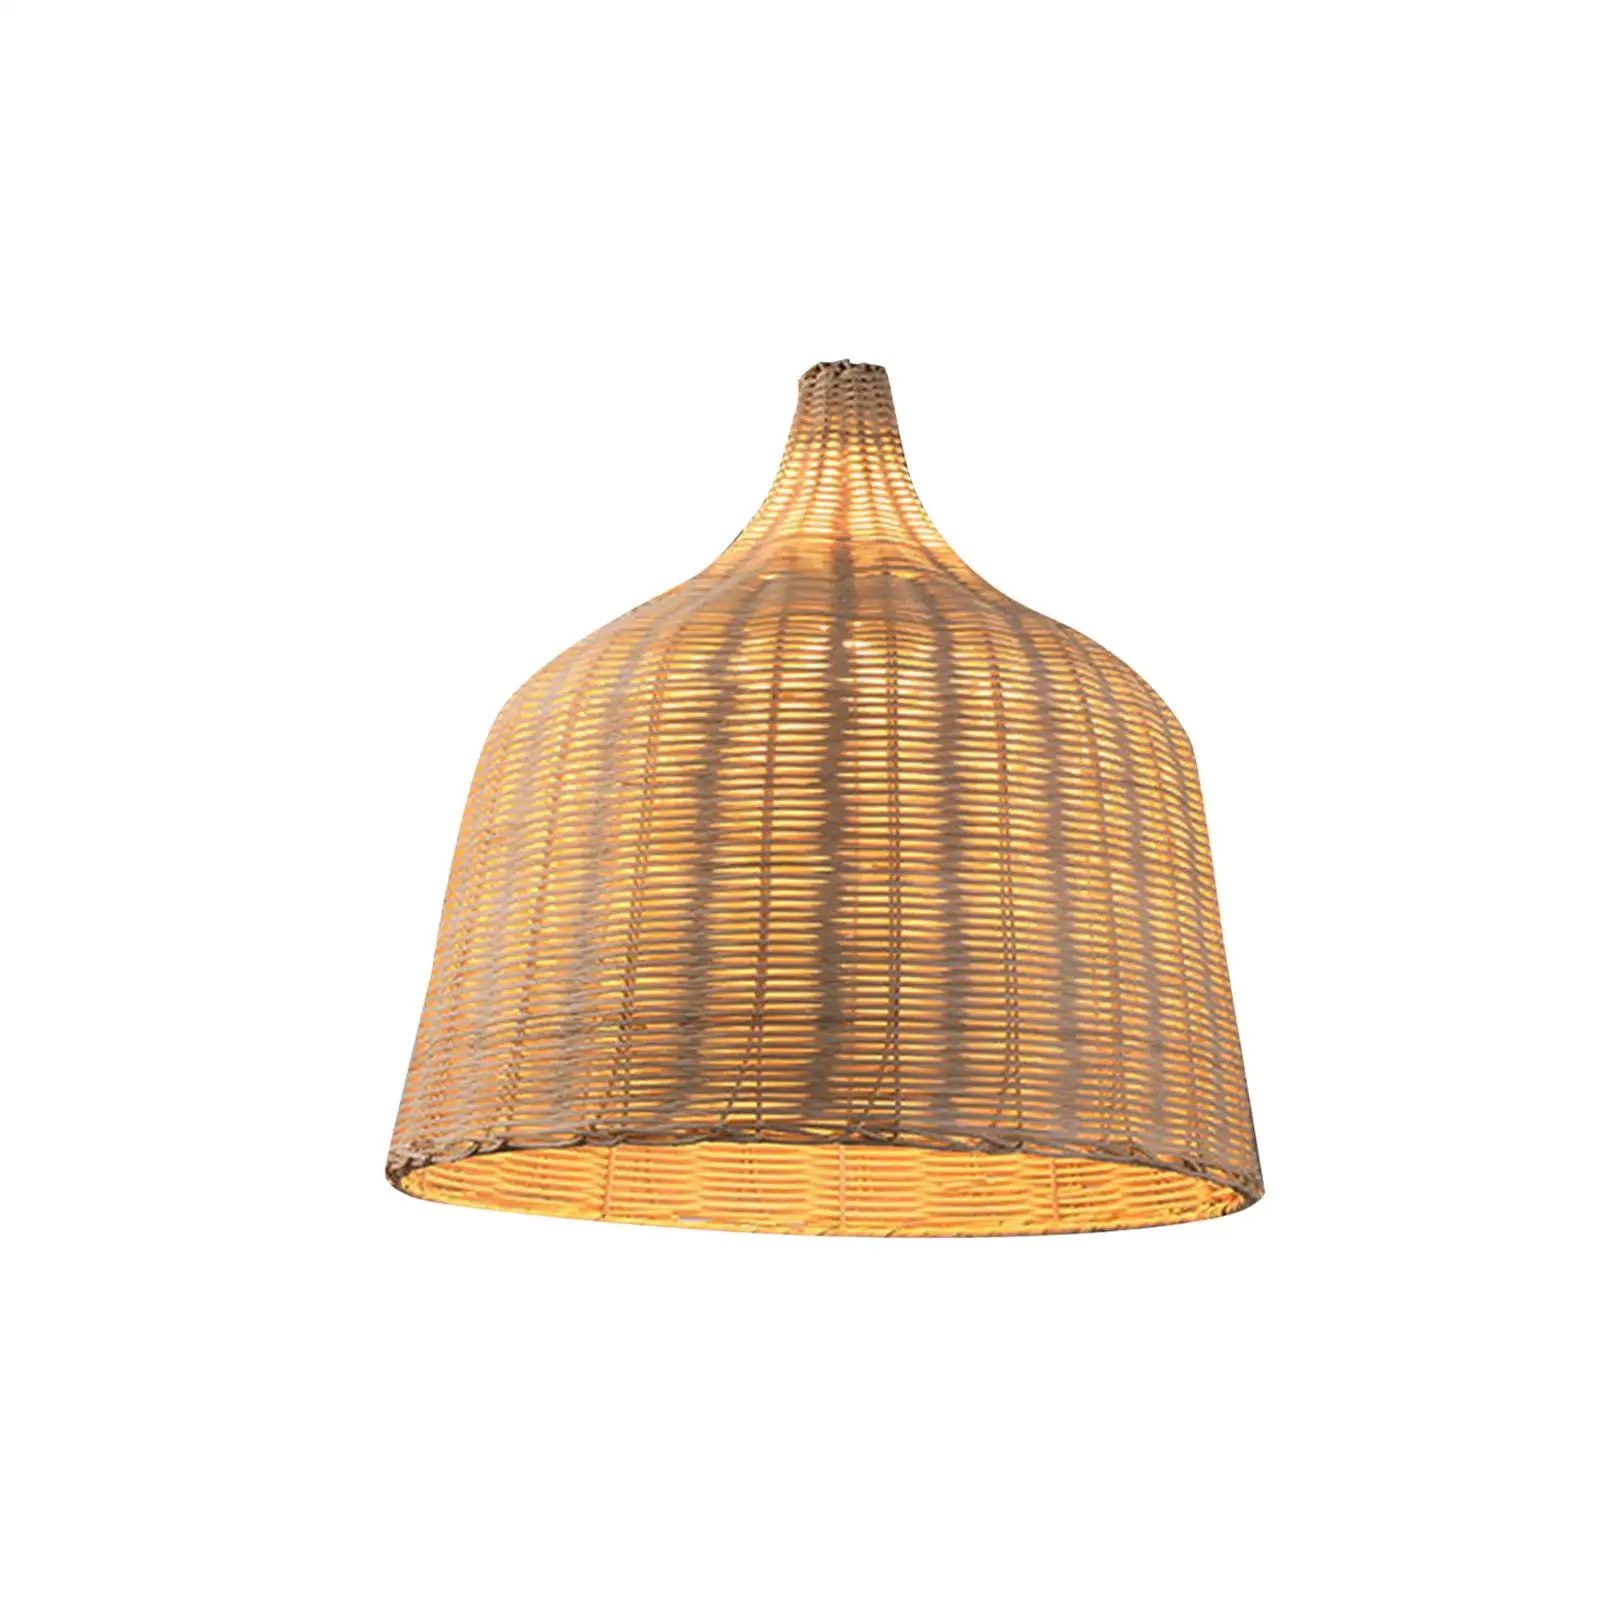 Creative Woven Pendant Lamp Shade Lighting Fixture Weaving Chandelier Rustic Light Shade for Kitchen Porch Restaurant Decor